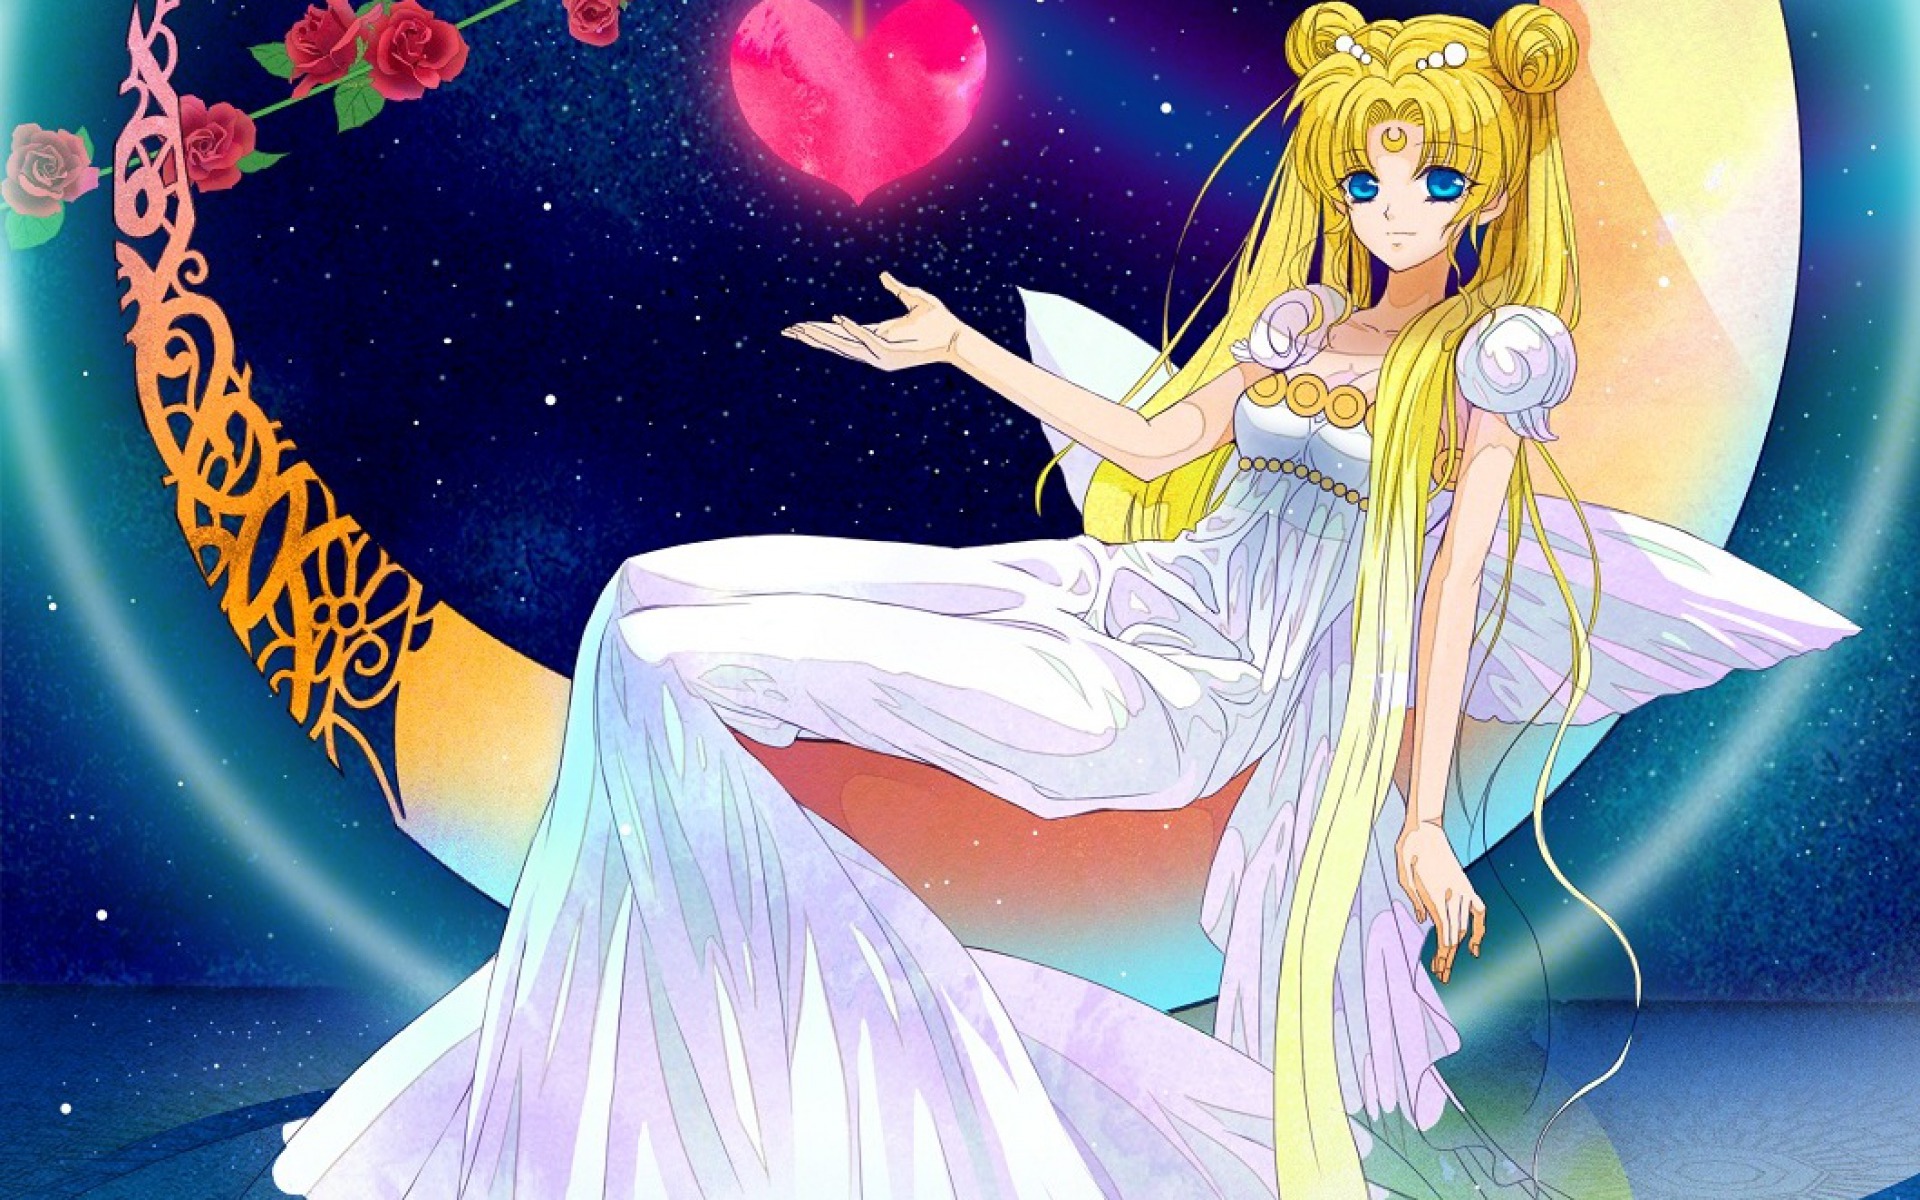 Wallpaper Sailor Moon  Wallpaperforu